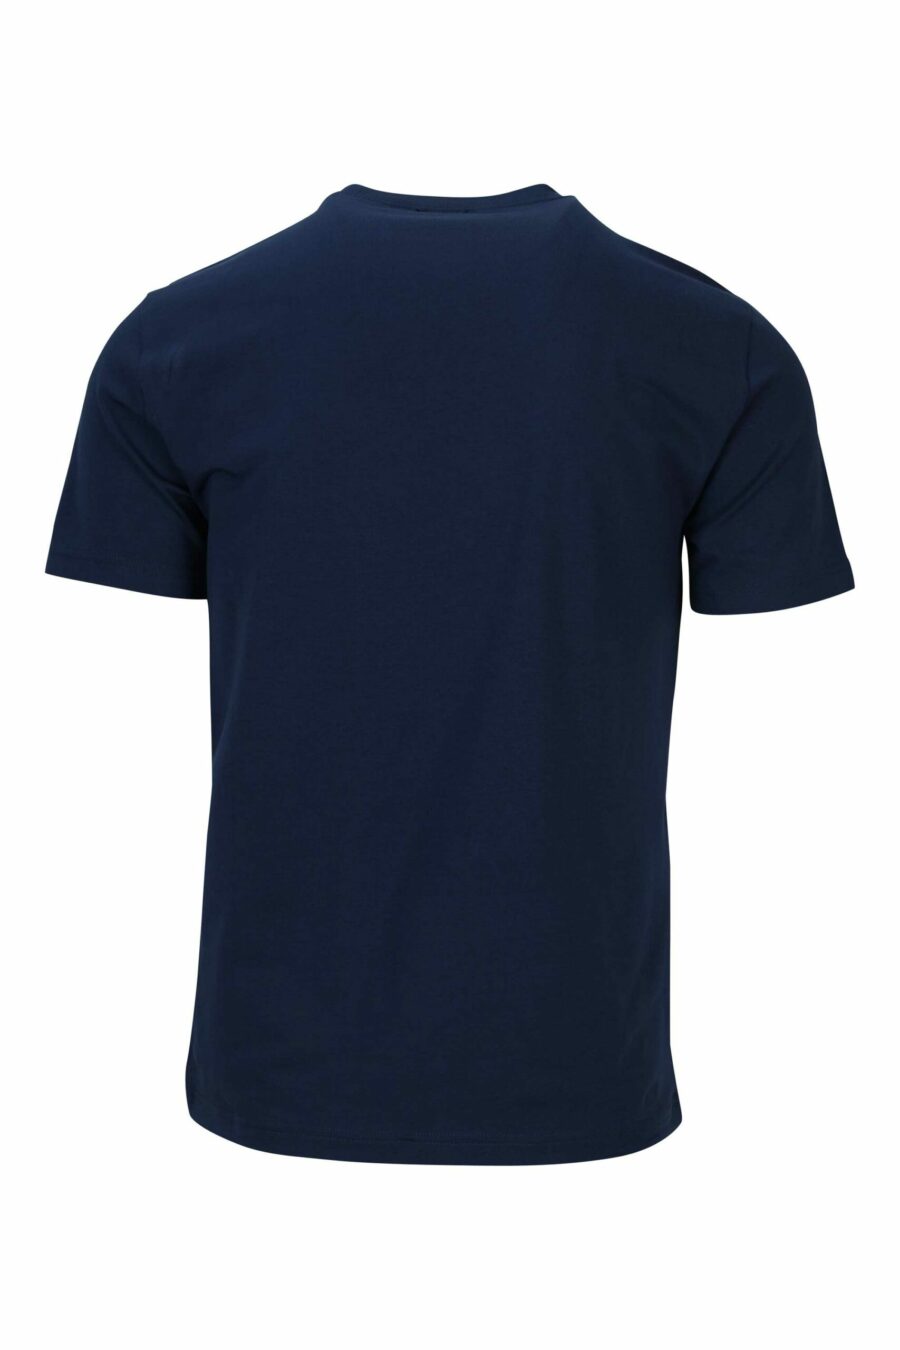 Camiseta azul oscura con maxilogo "lux identity" naranja neón - 8058947491445 1 scaled